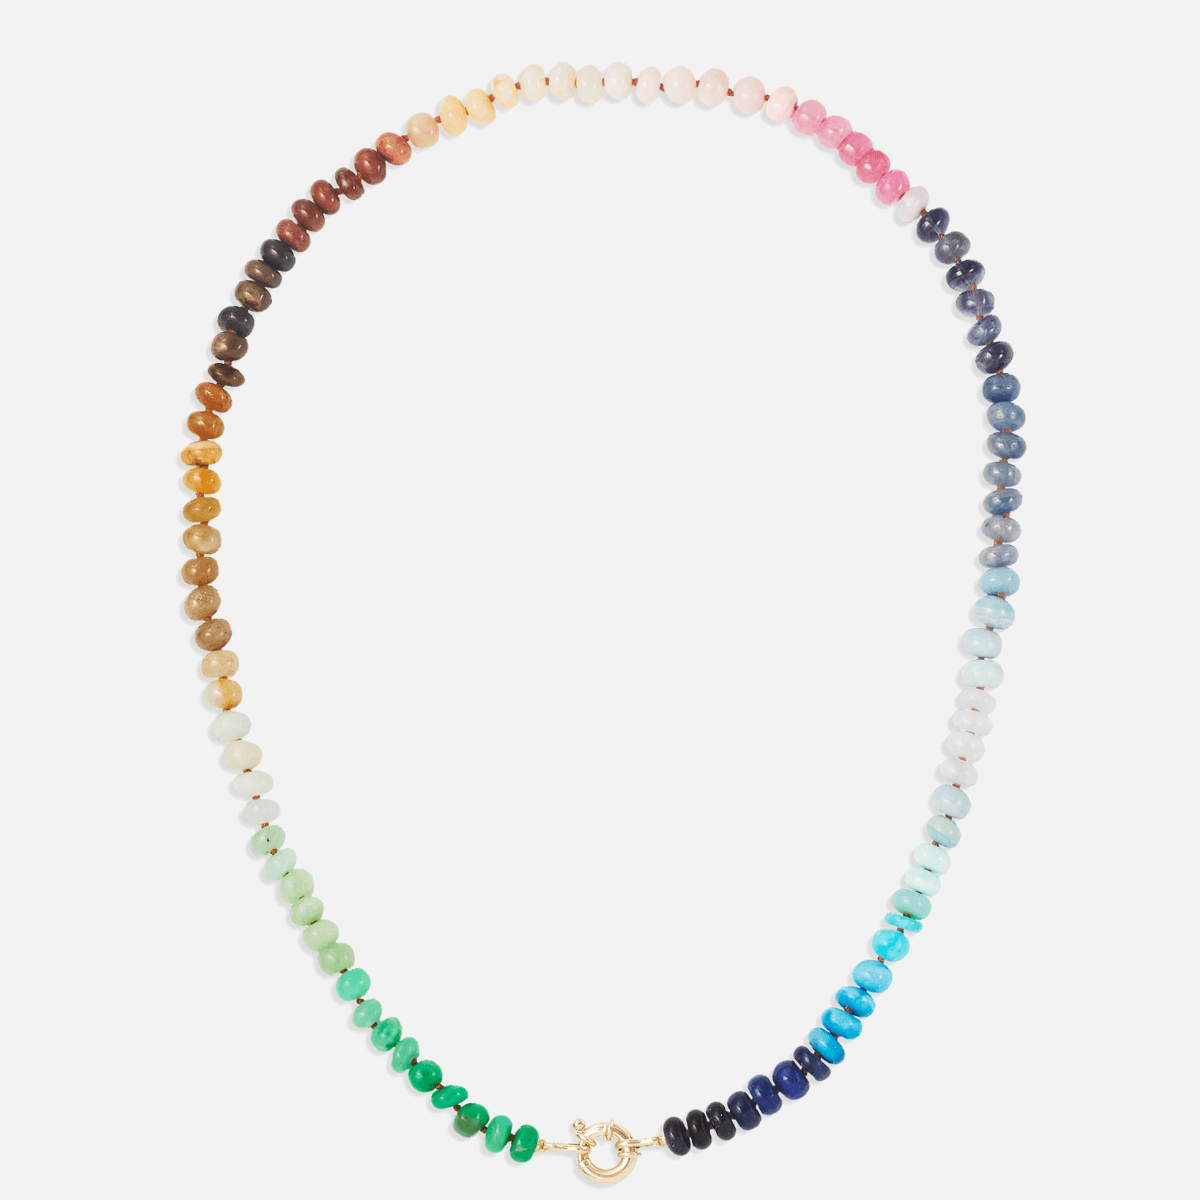 Exclusive Rainbow Gemstone Necklace - Encirkled Jewelry - At Present